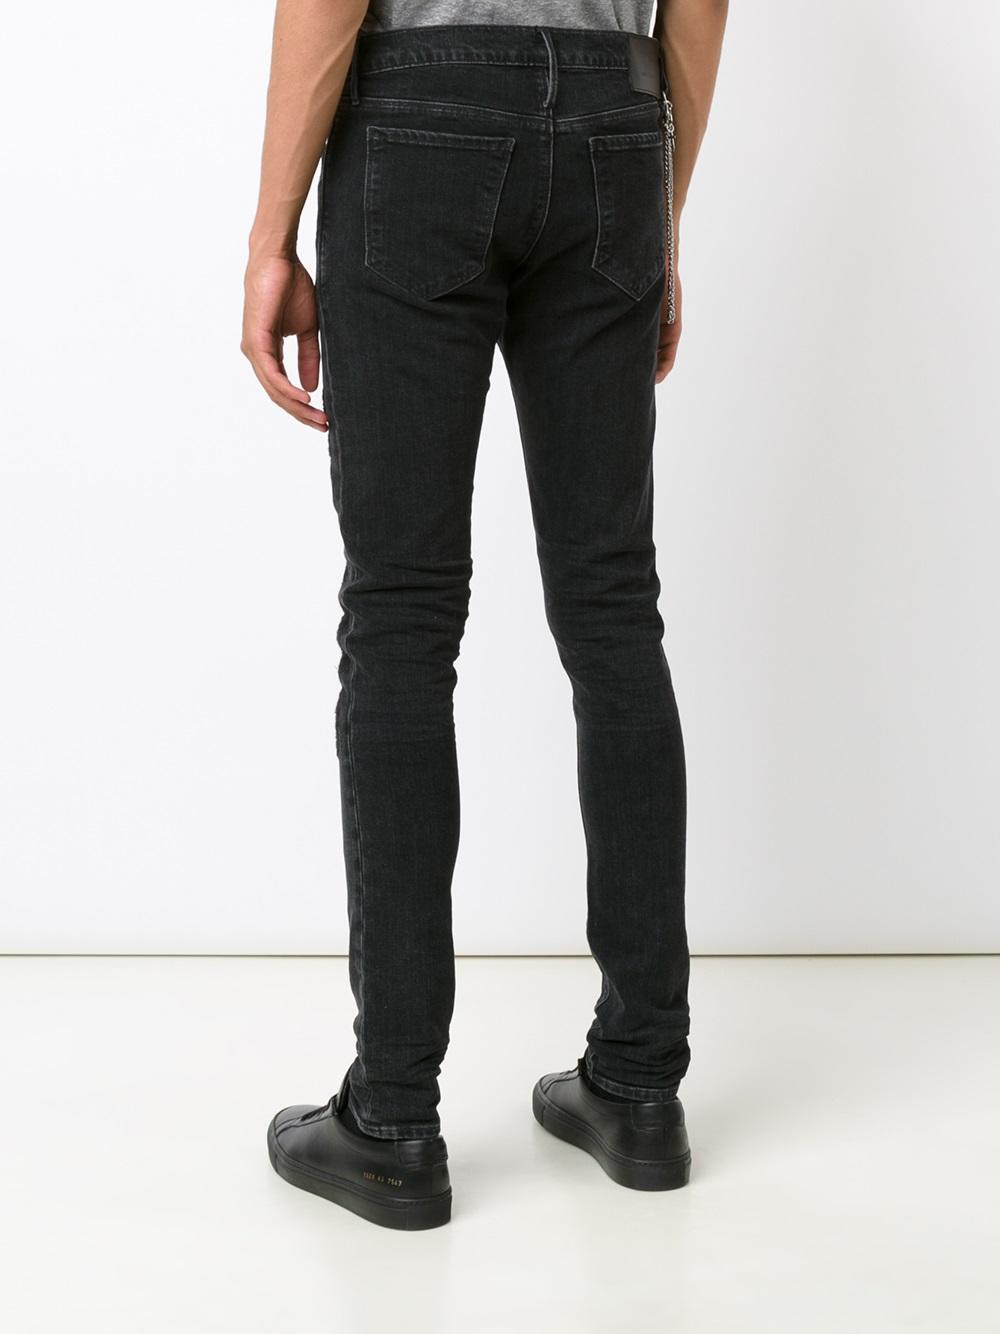 RTA Denim Embroidered Skinny Jeans in Black for Men - Lyst